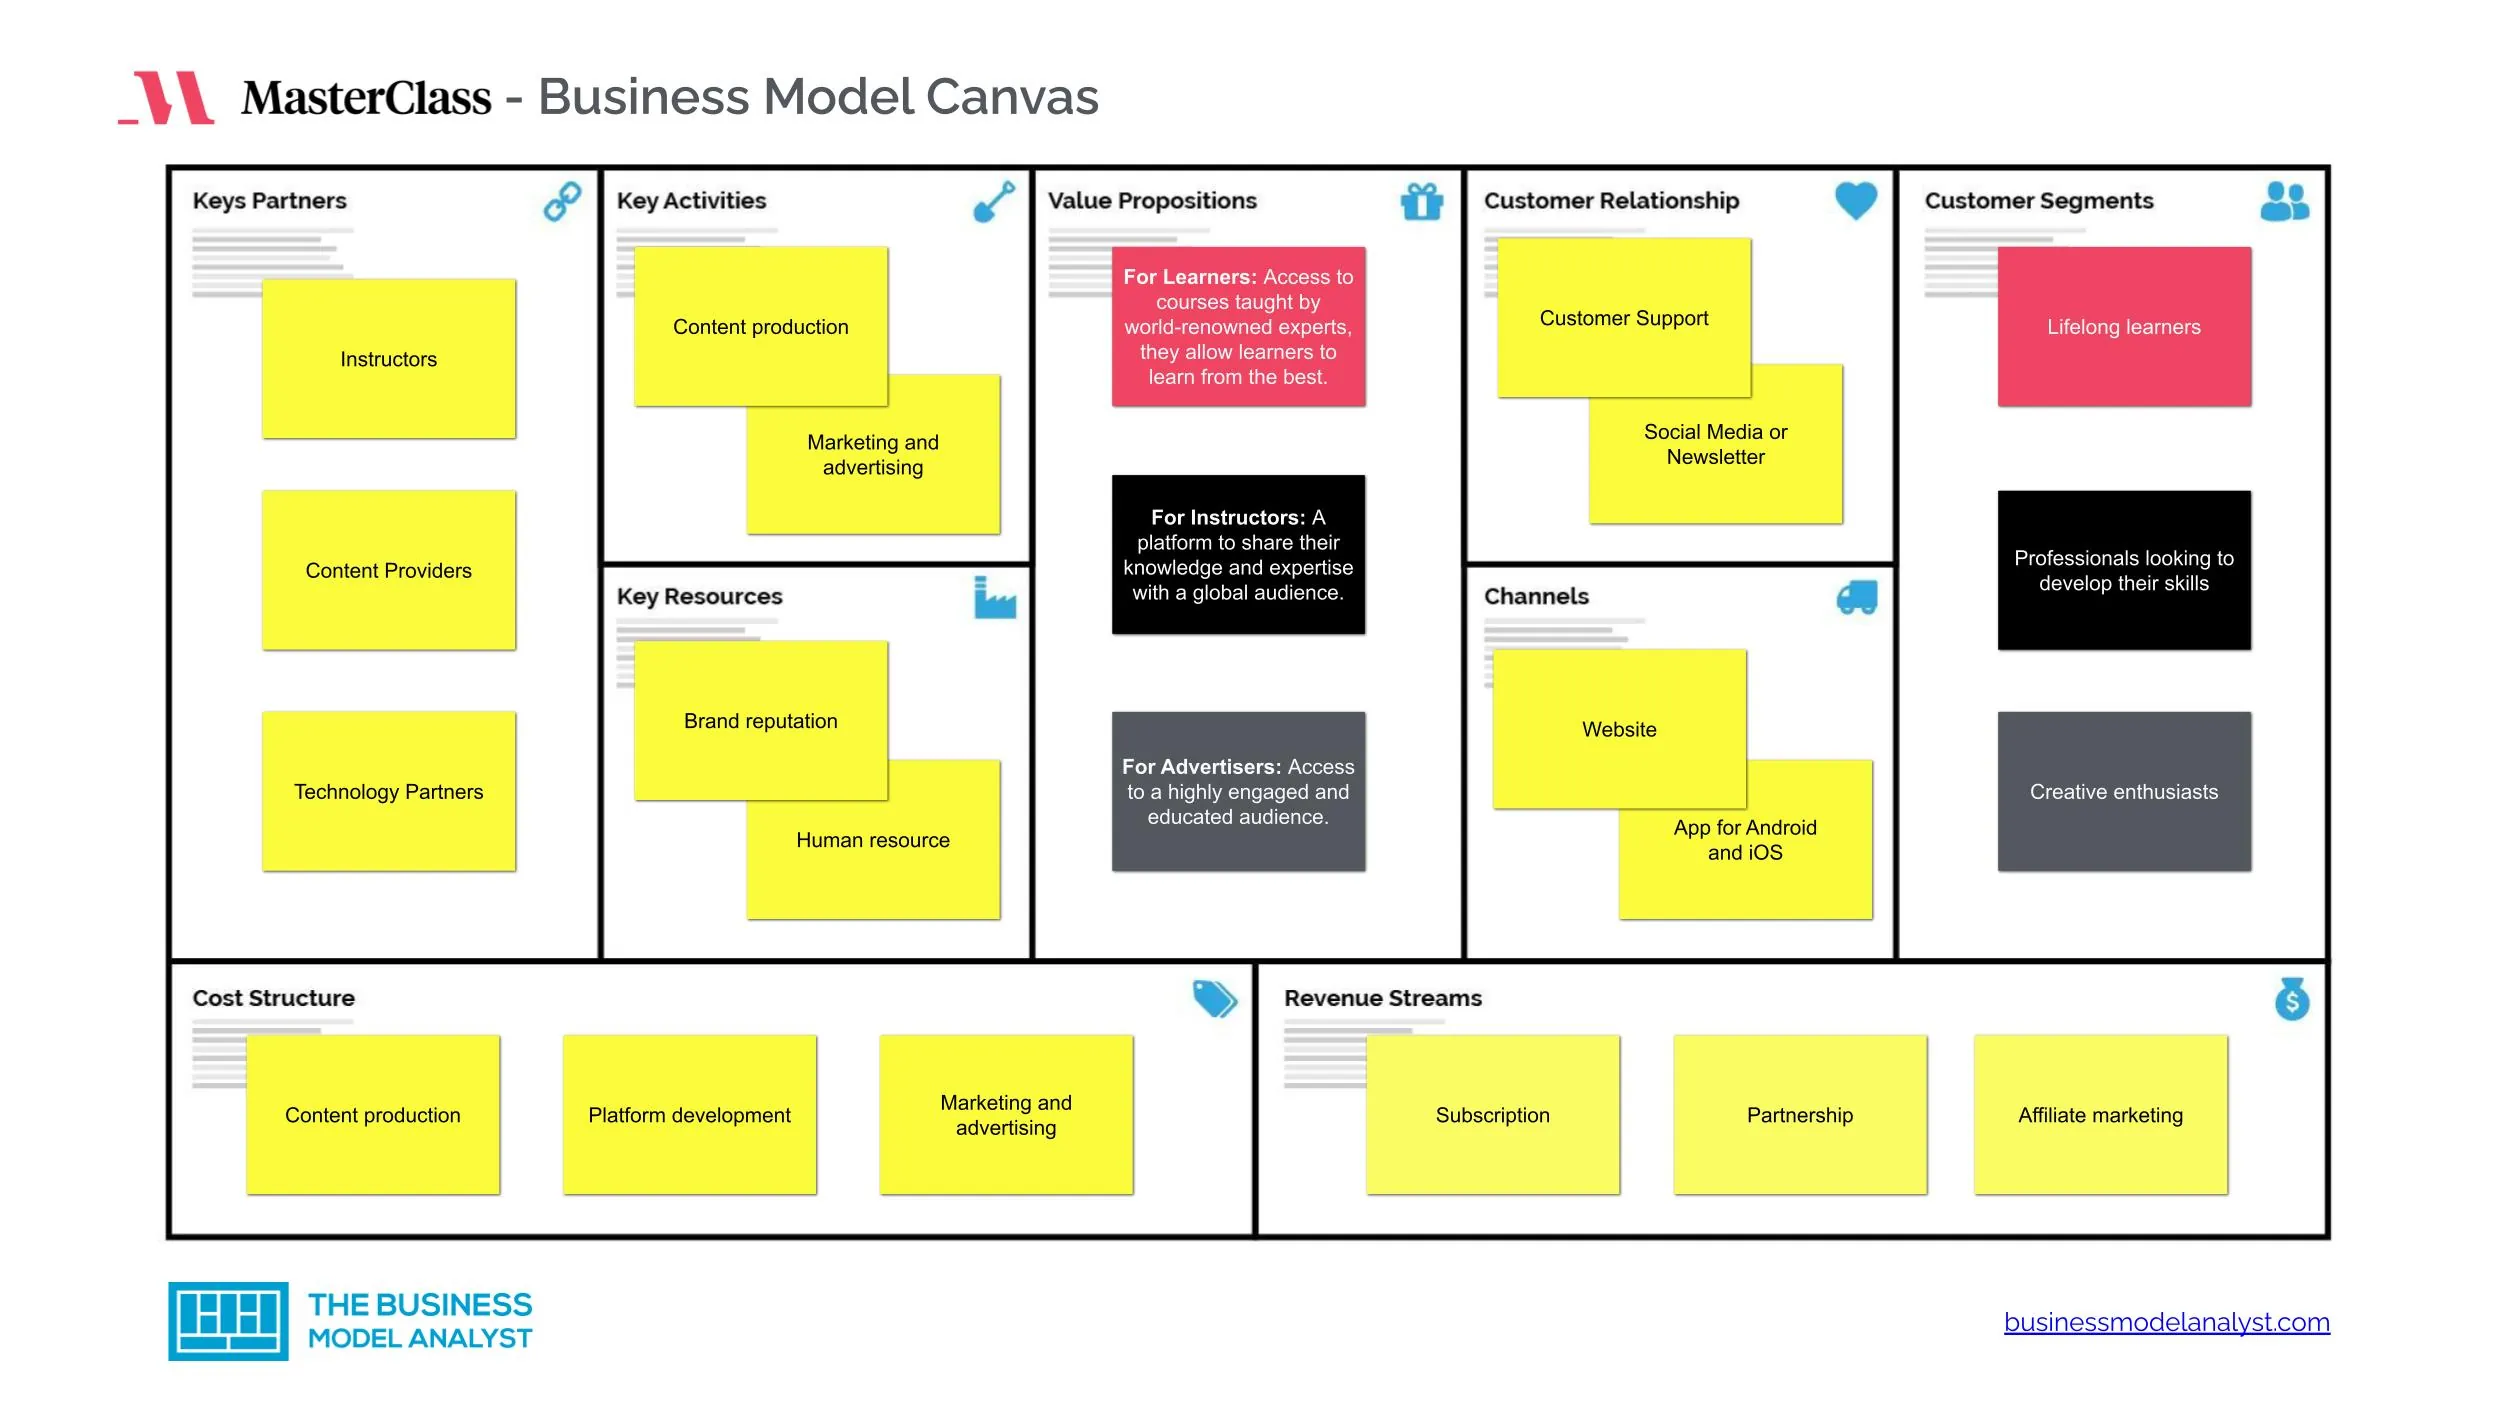 MasterClass Business Model Canvas - MasterClass Business Model